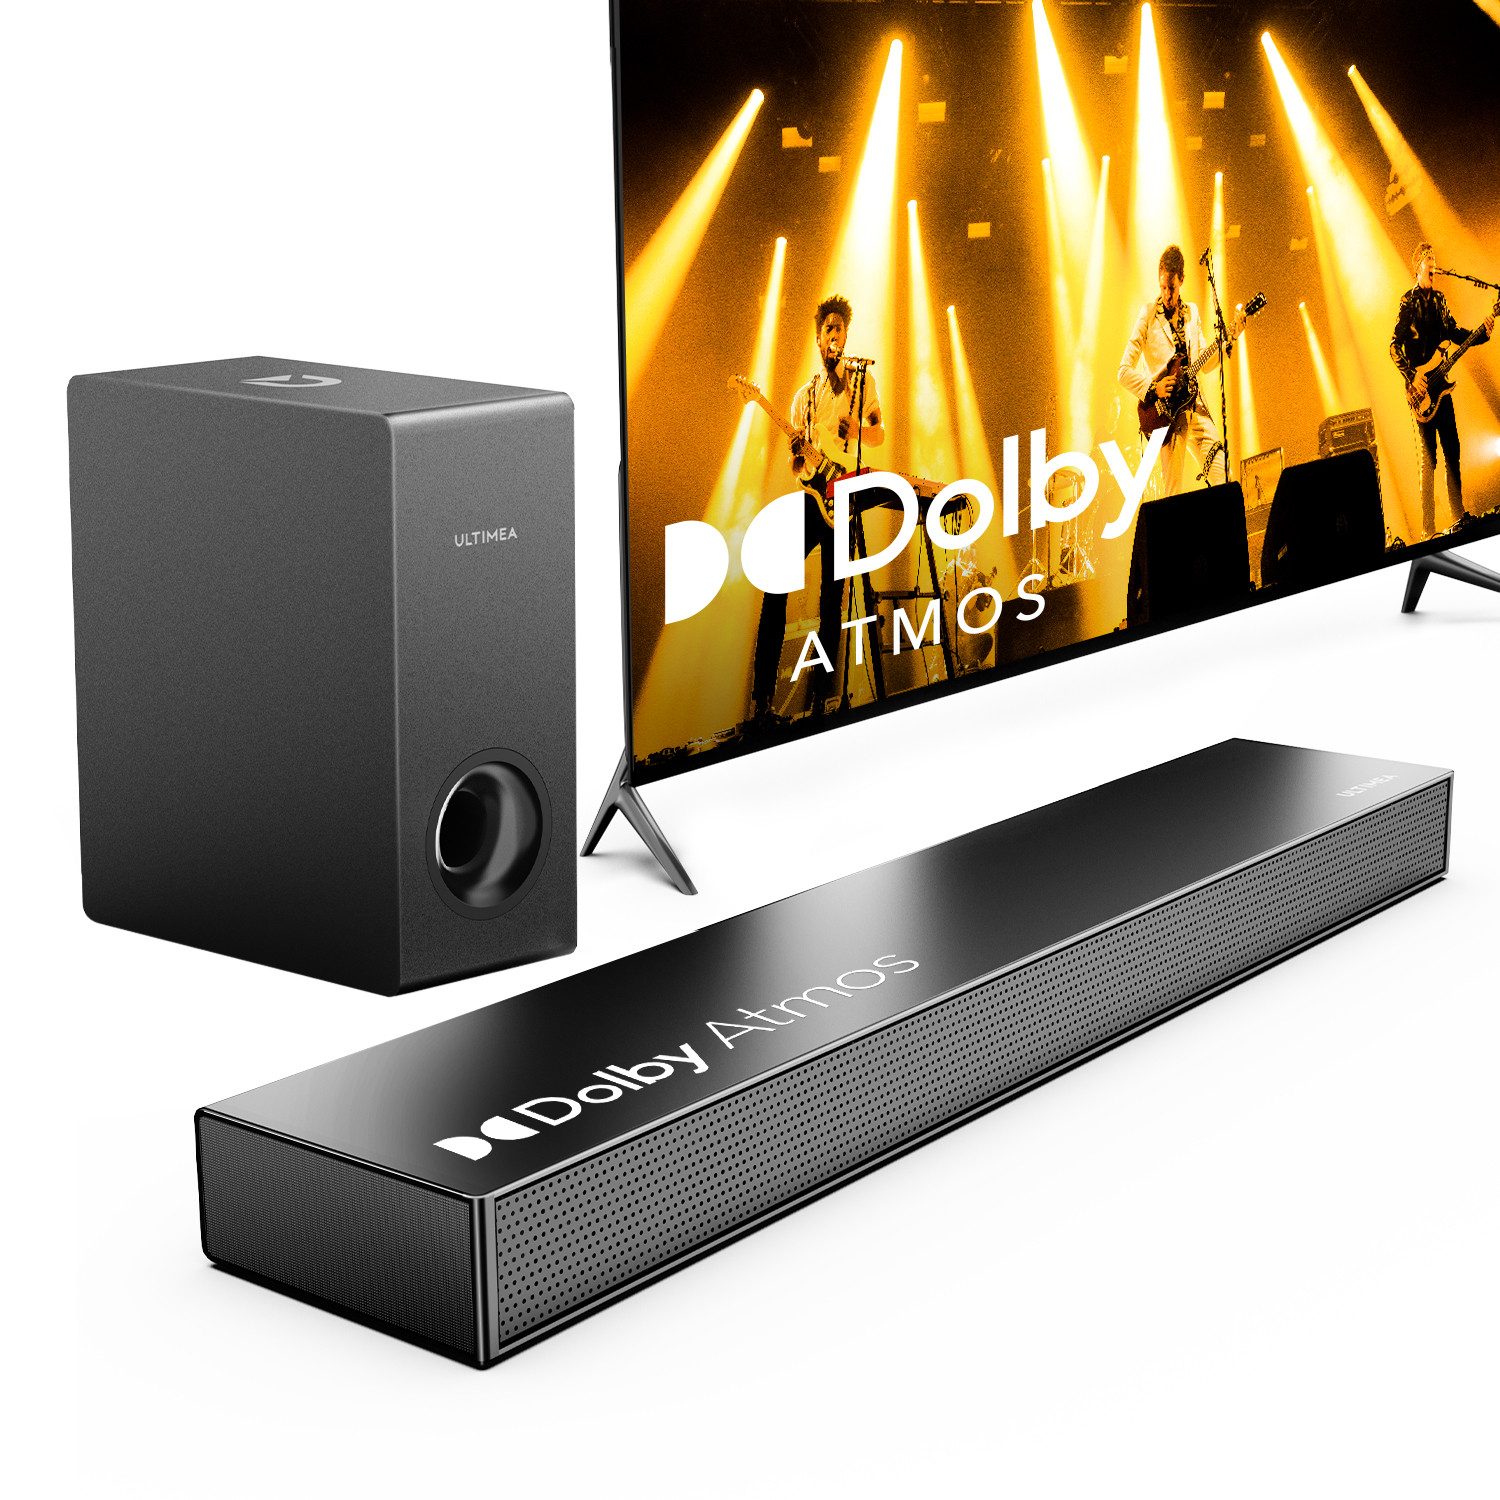 Ultimea Nova S50 2.1 Kanal Dolby-Atmos Soundbar (190 W, BassMAX, 3D Surround Sound System für TV-Lautsprecher, HDMI eARC)